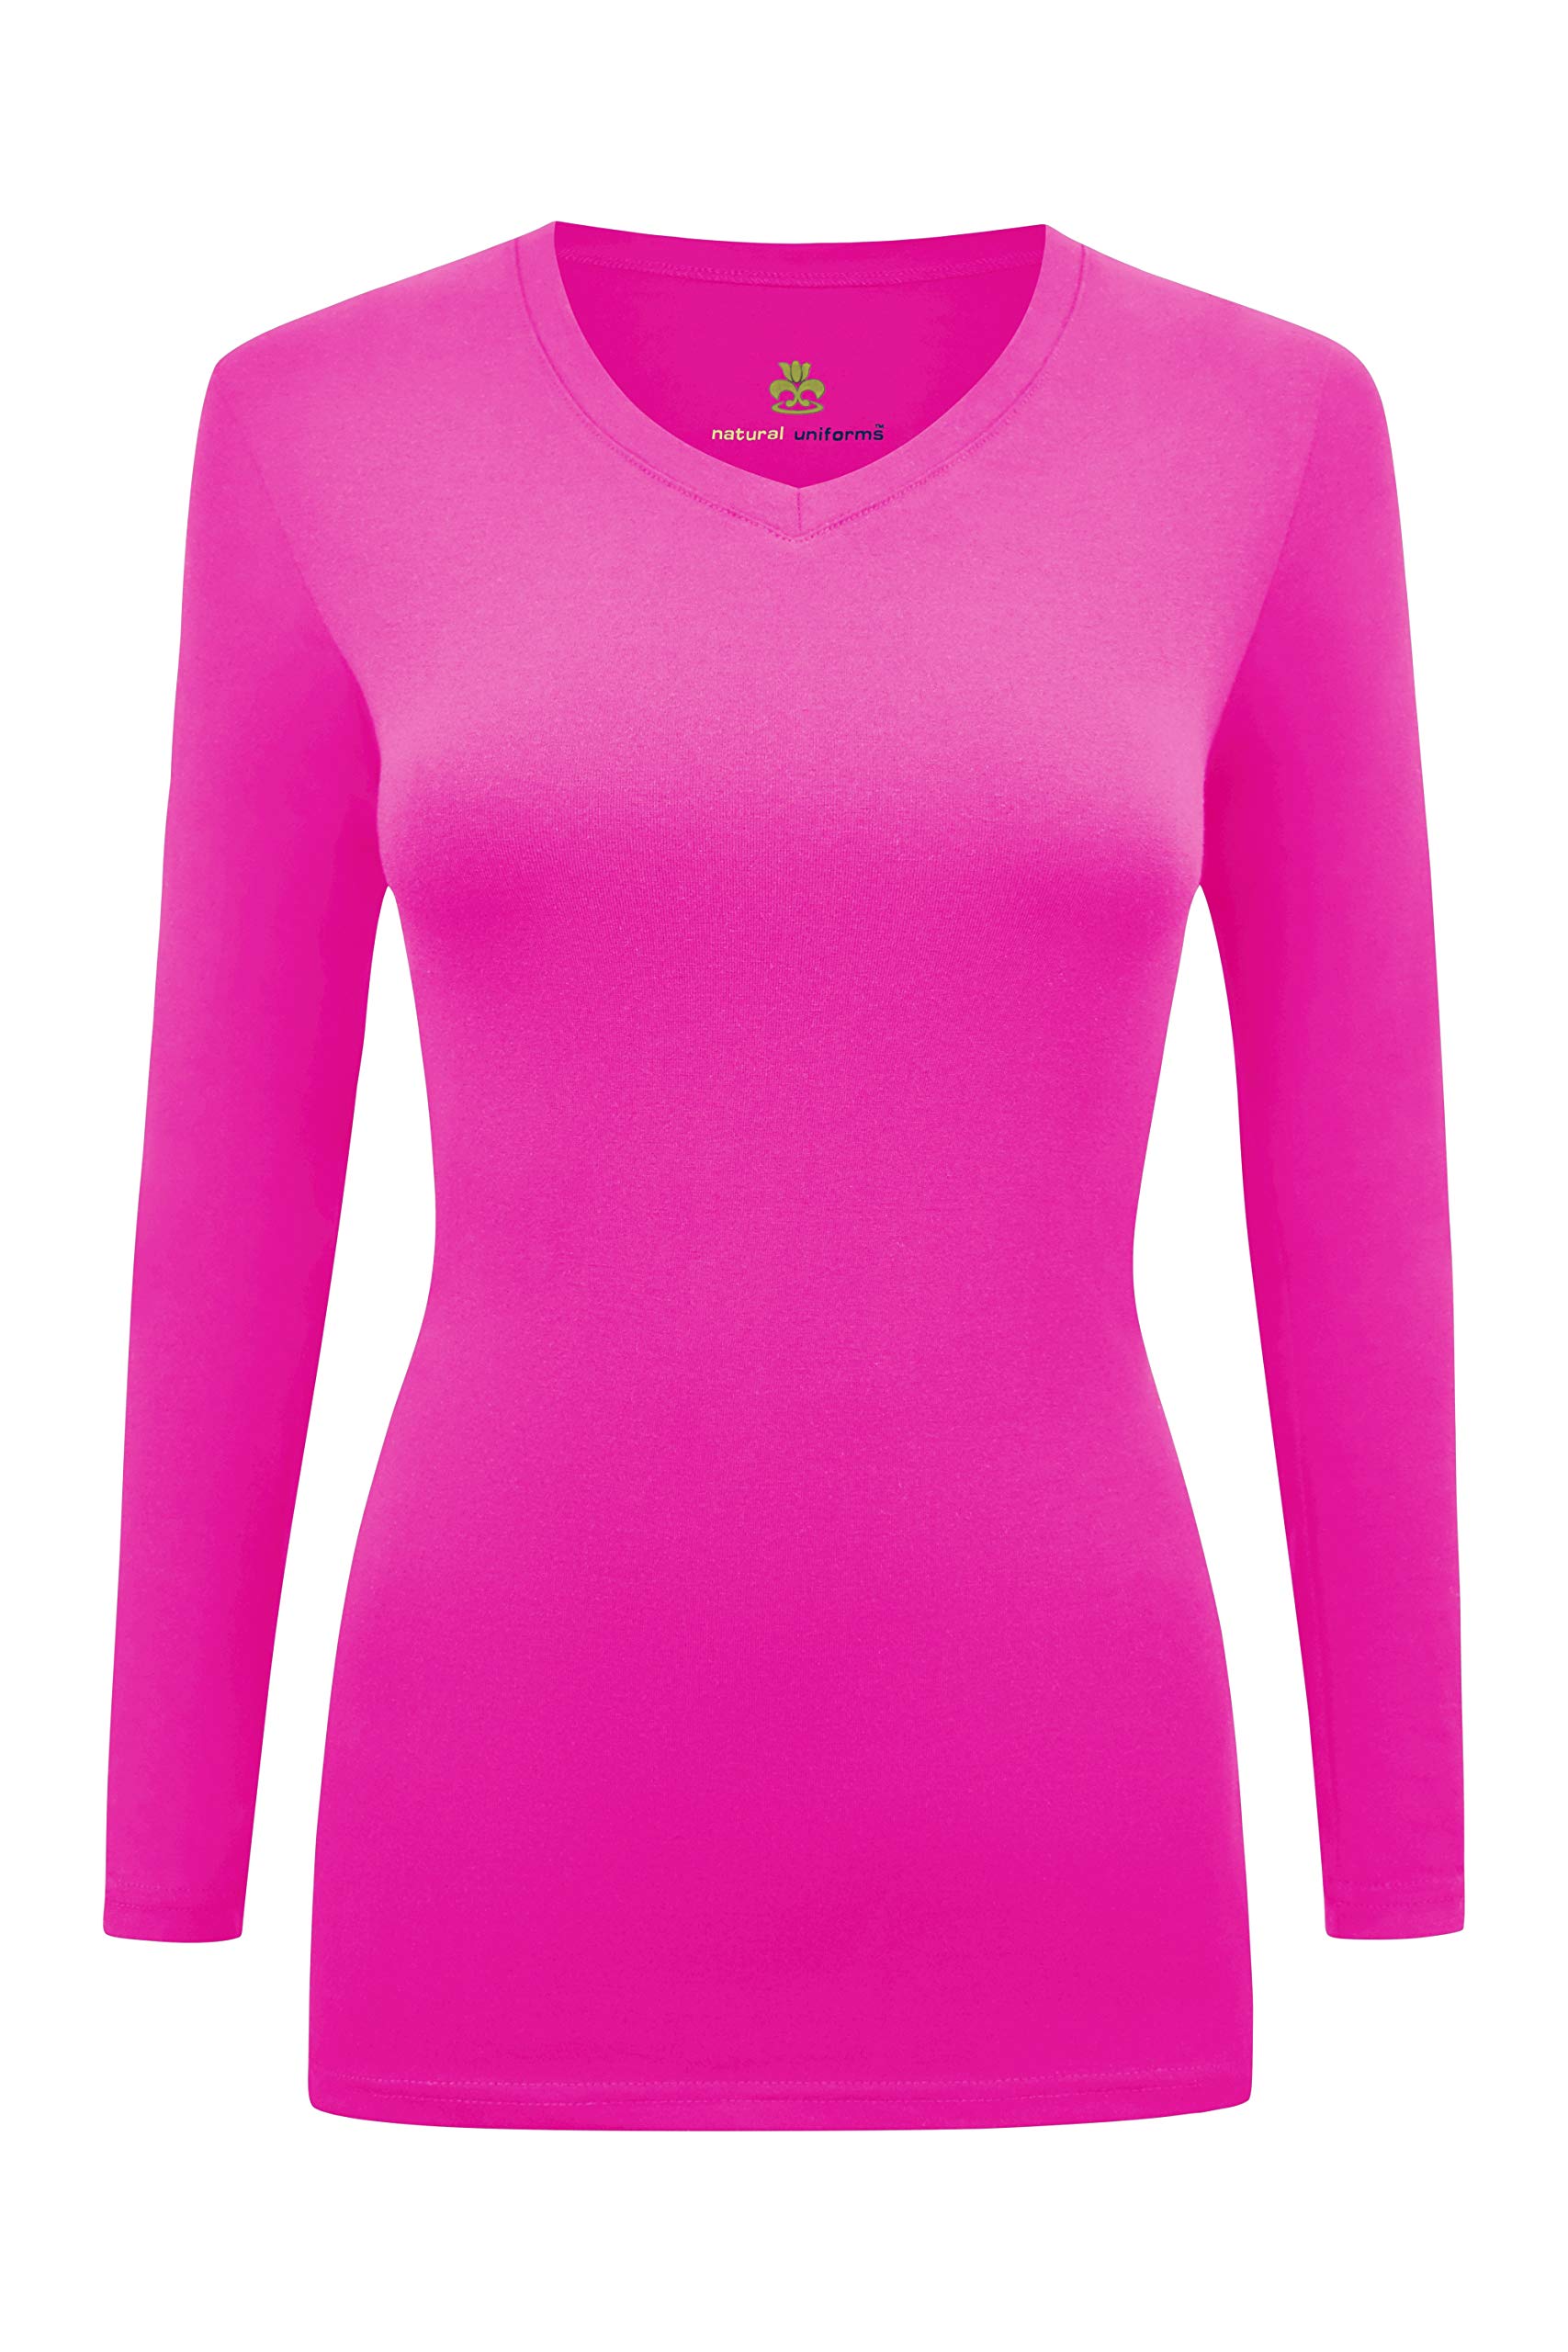 Natural Uniforms Womens Long Sleeve V-Neck T-Shirt Under Scrub (Neon Pink, Small)